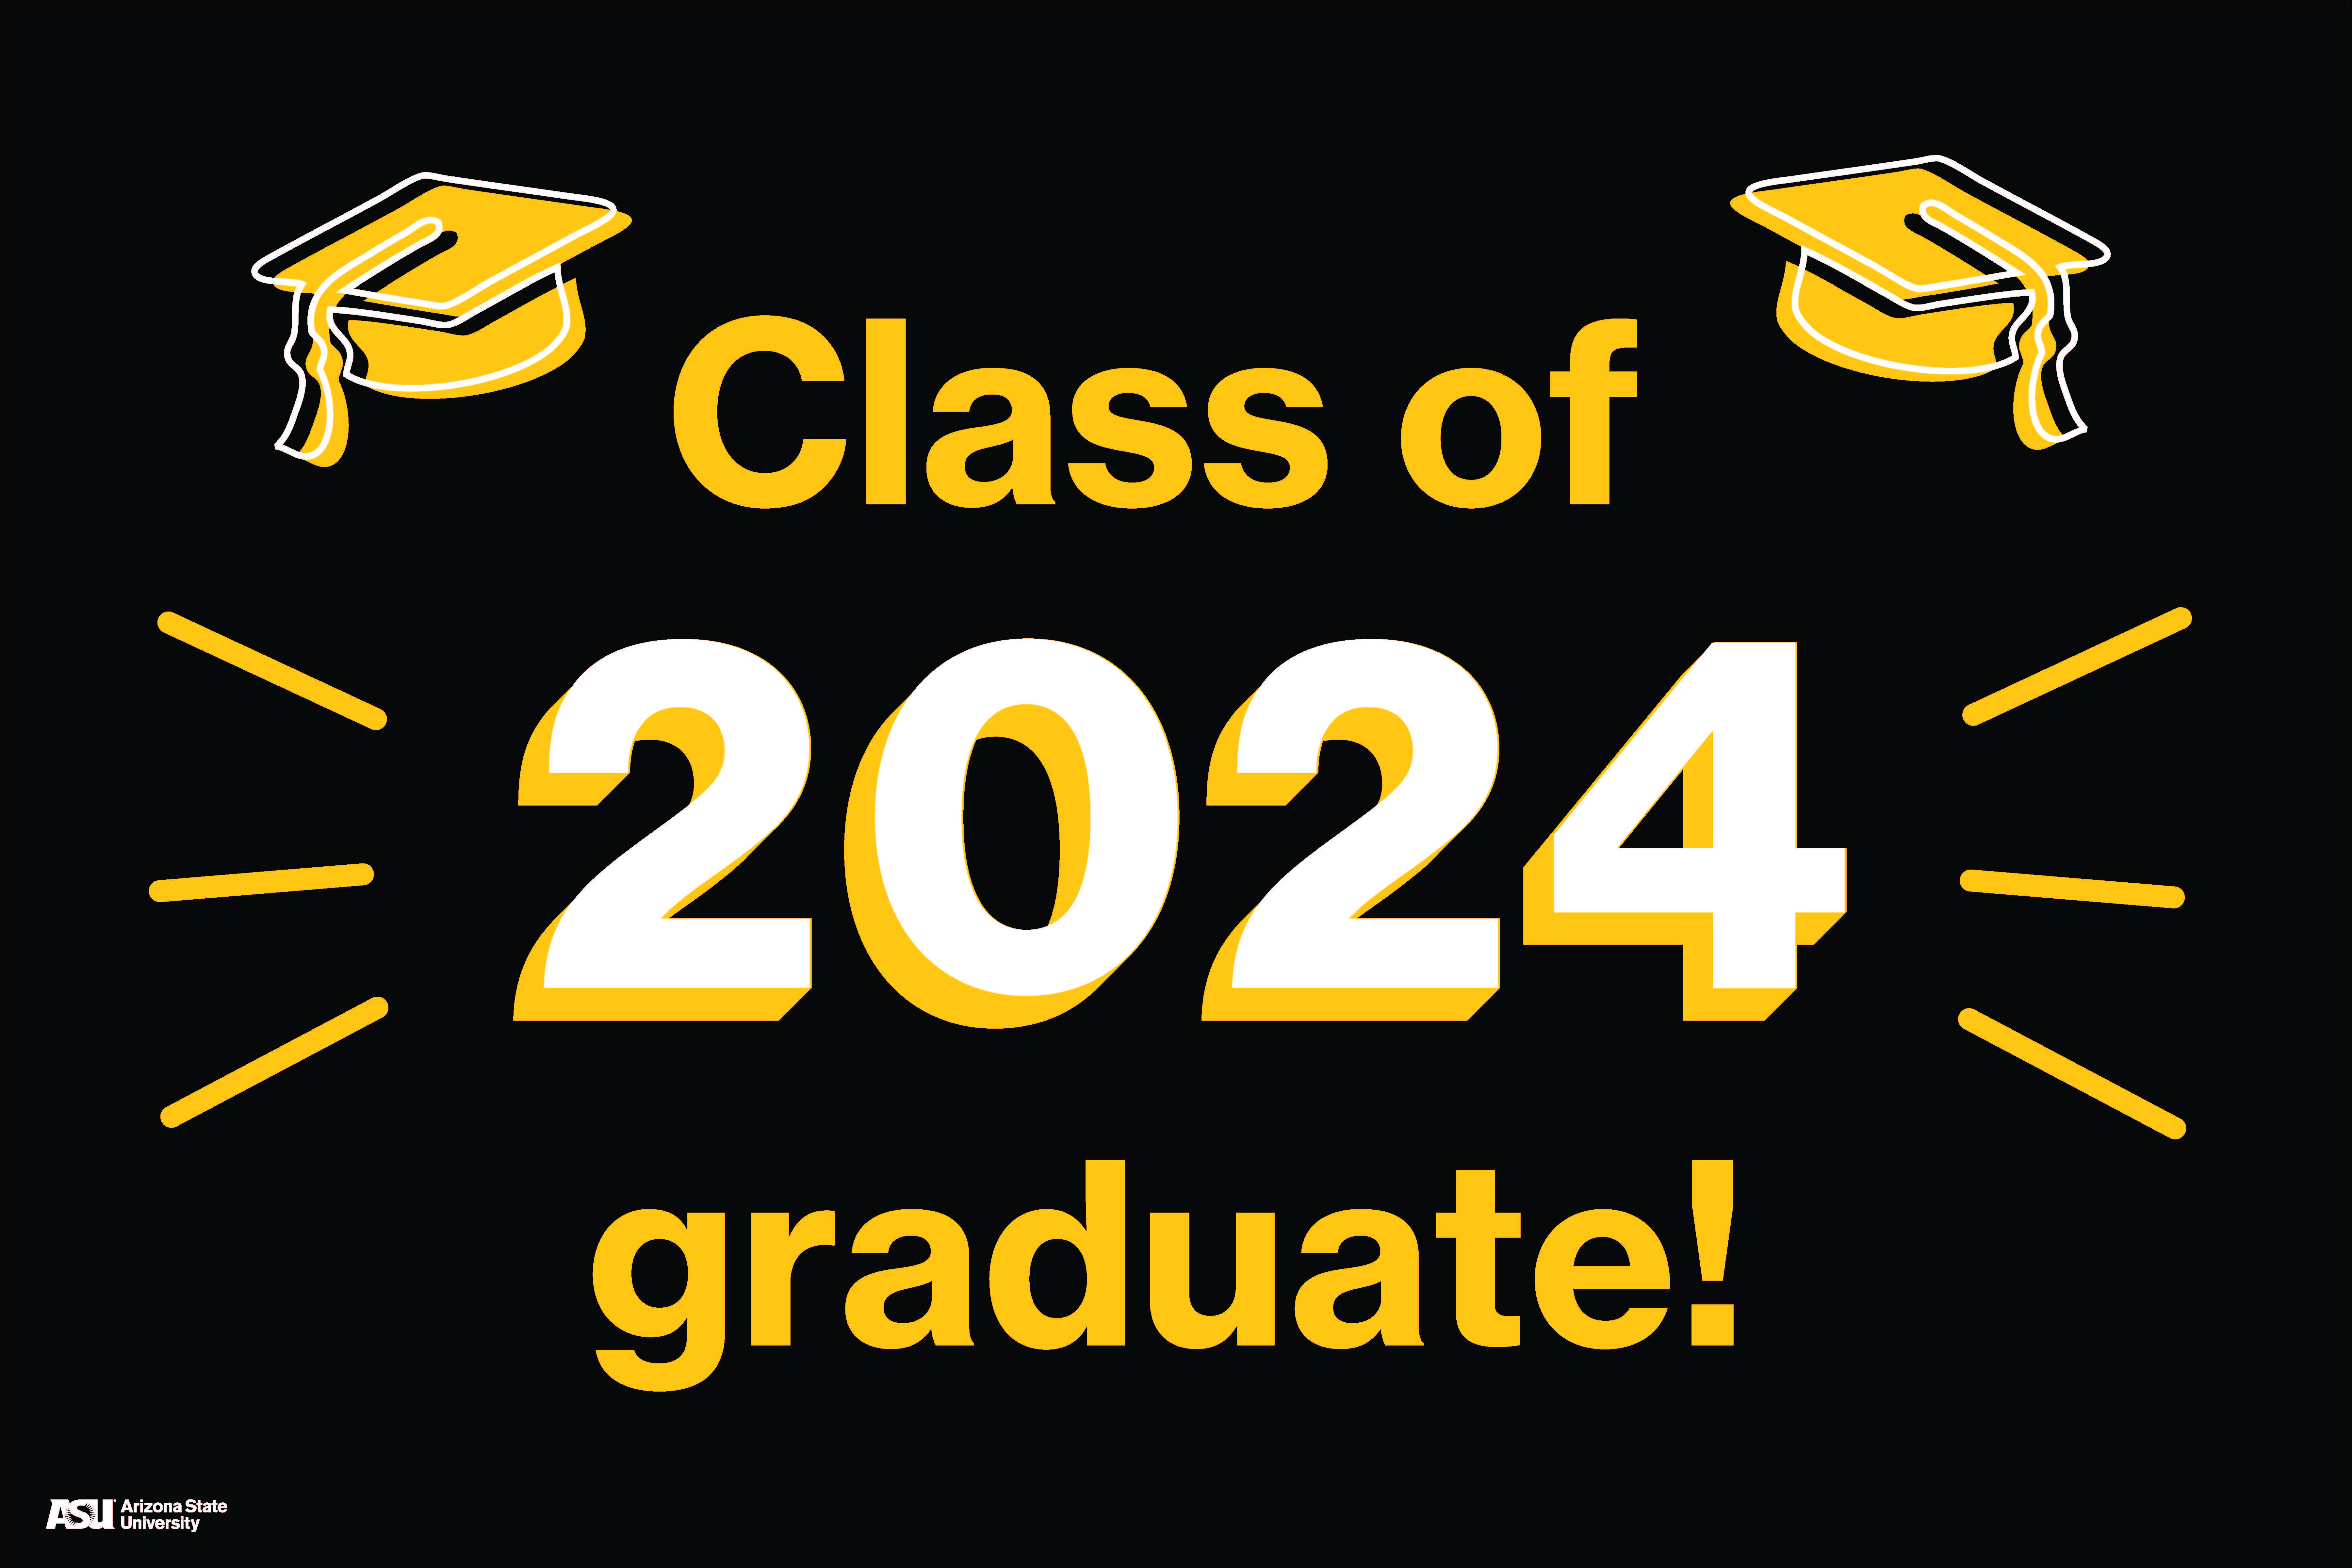 Black class of 2024 graduate lawn sign